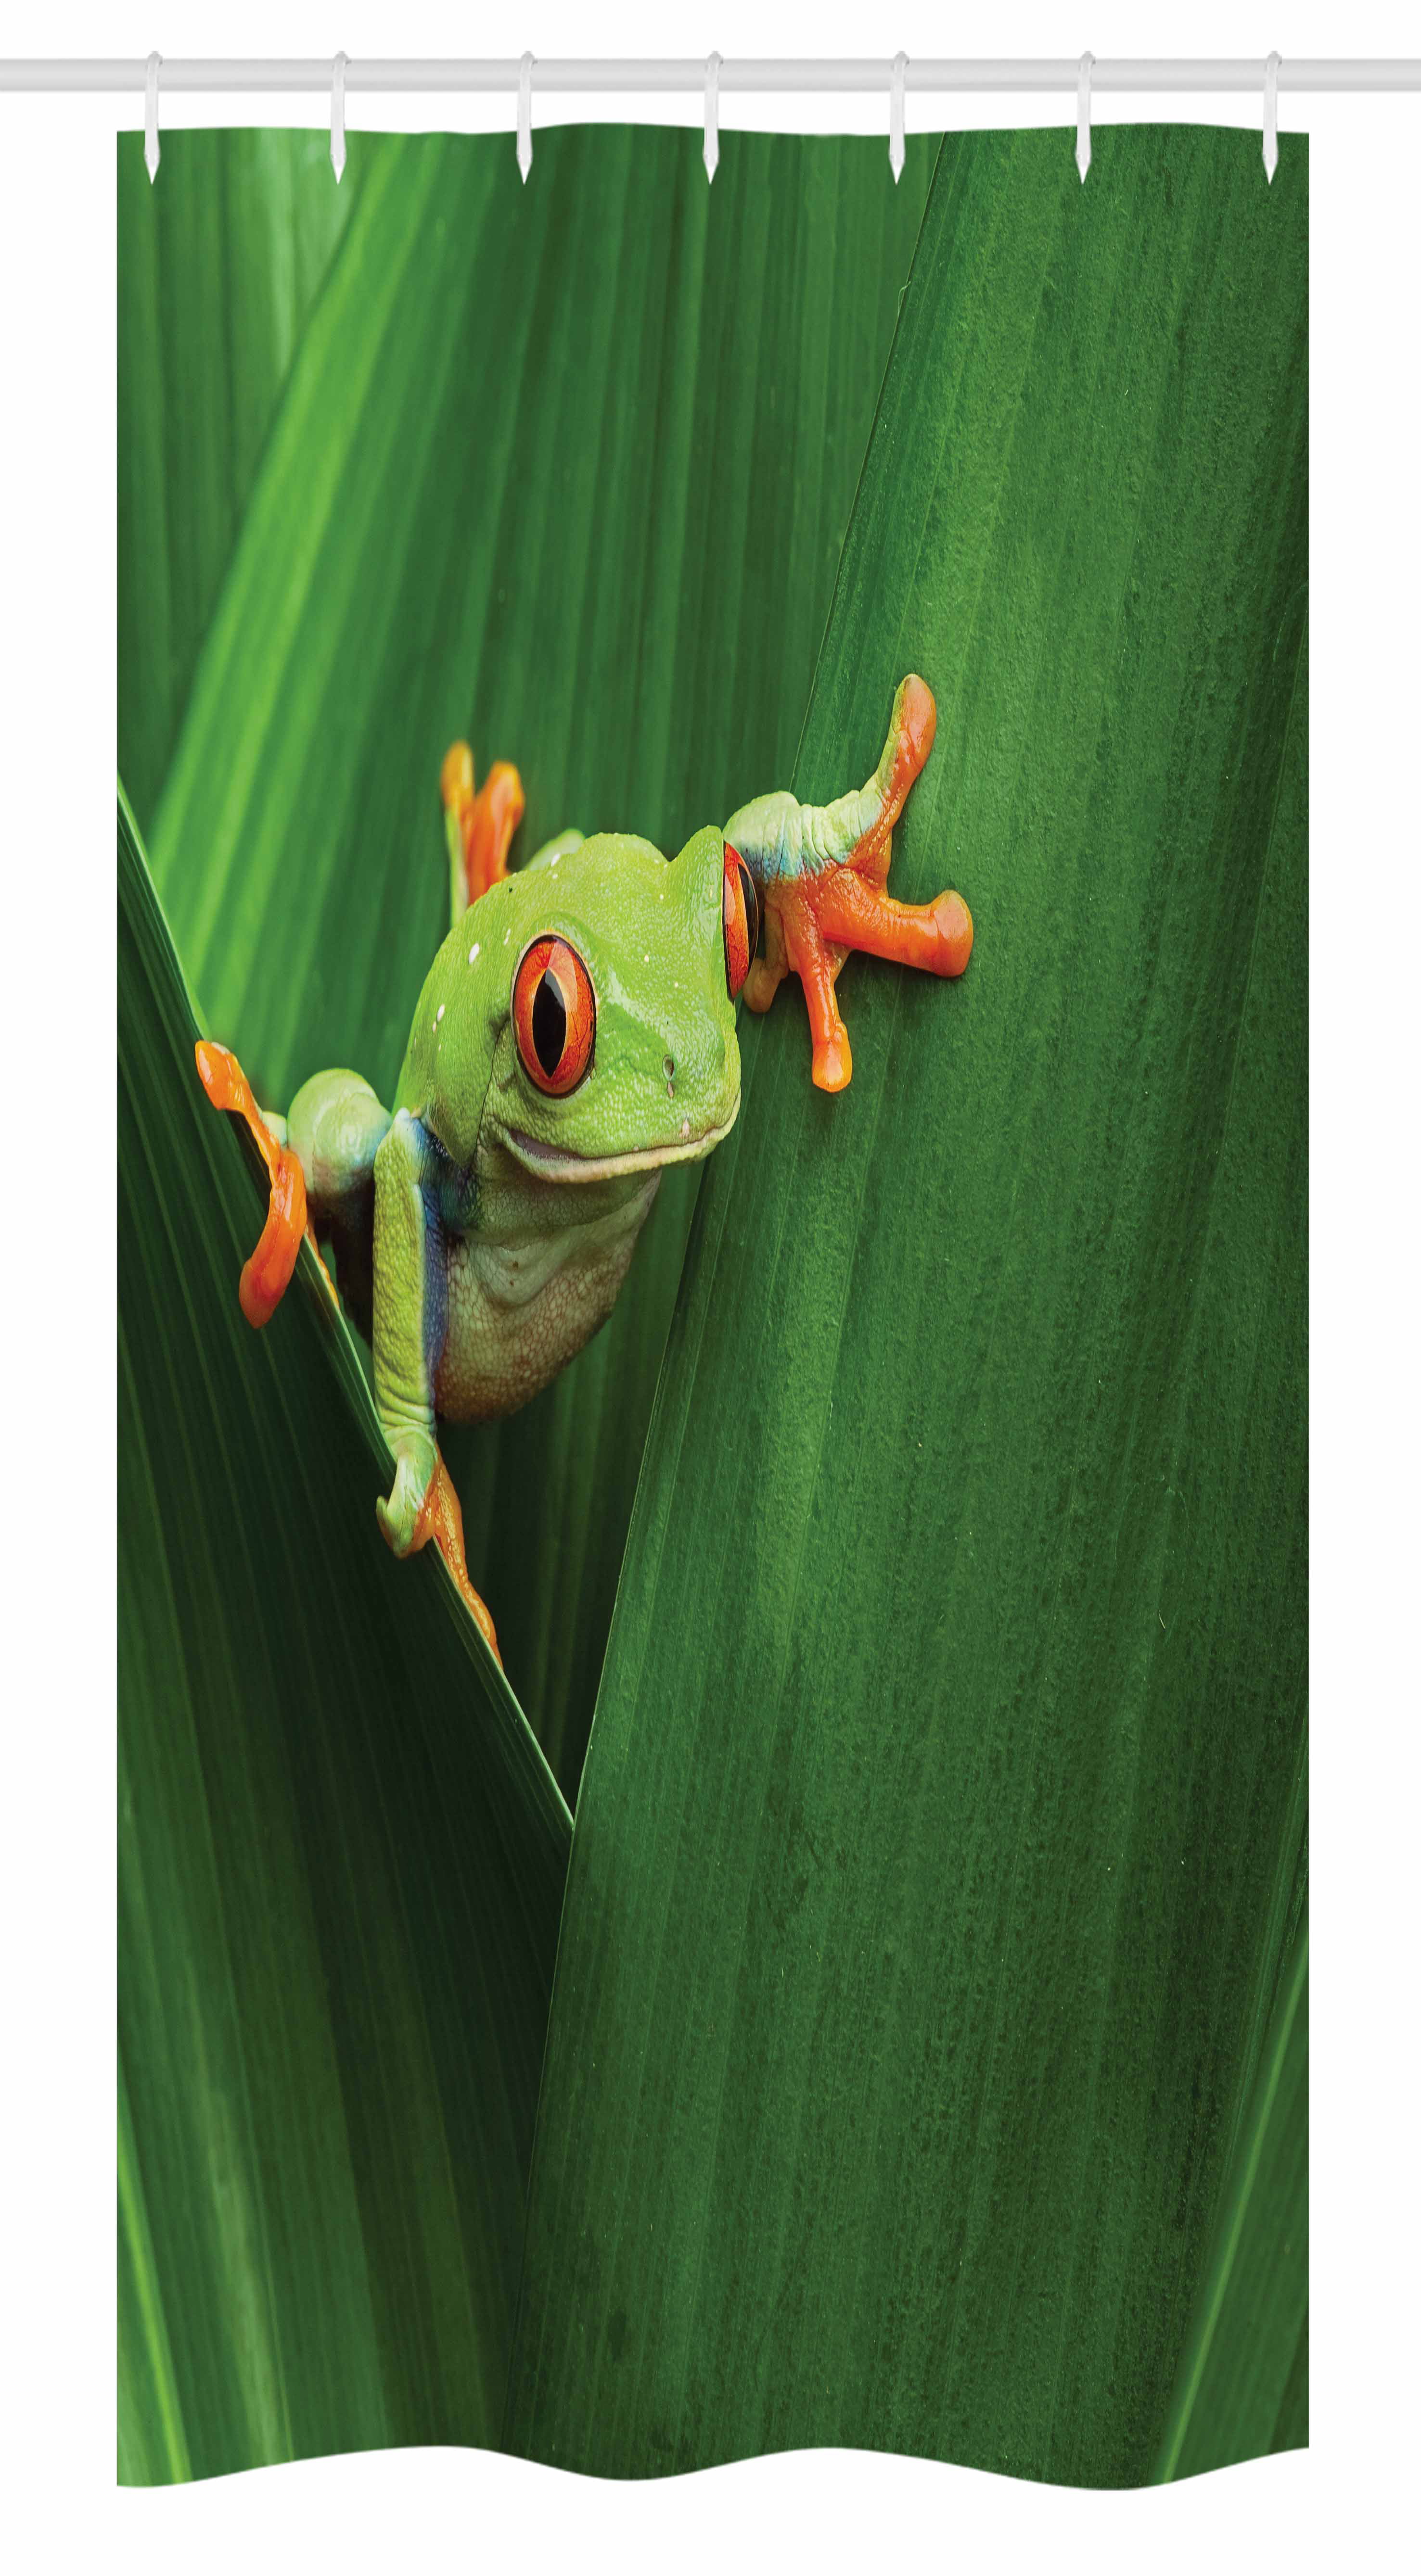 Red Eyed Frog Exotic Leaves Wild Nature Animal Vivid Image Shower Curtain Set 